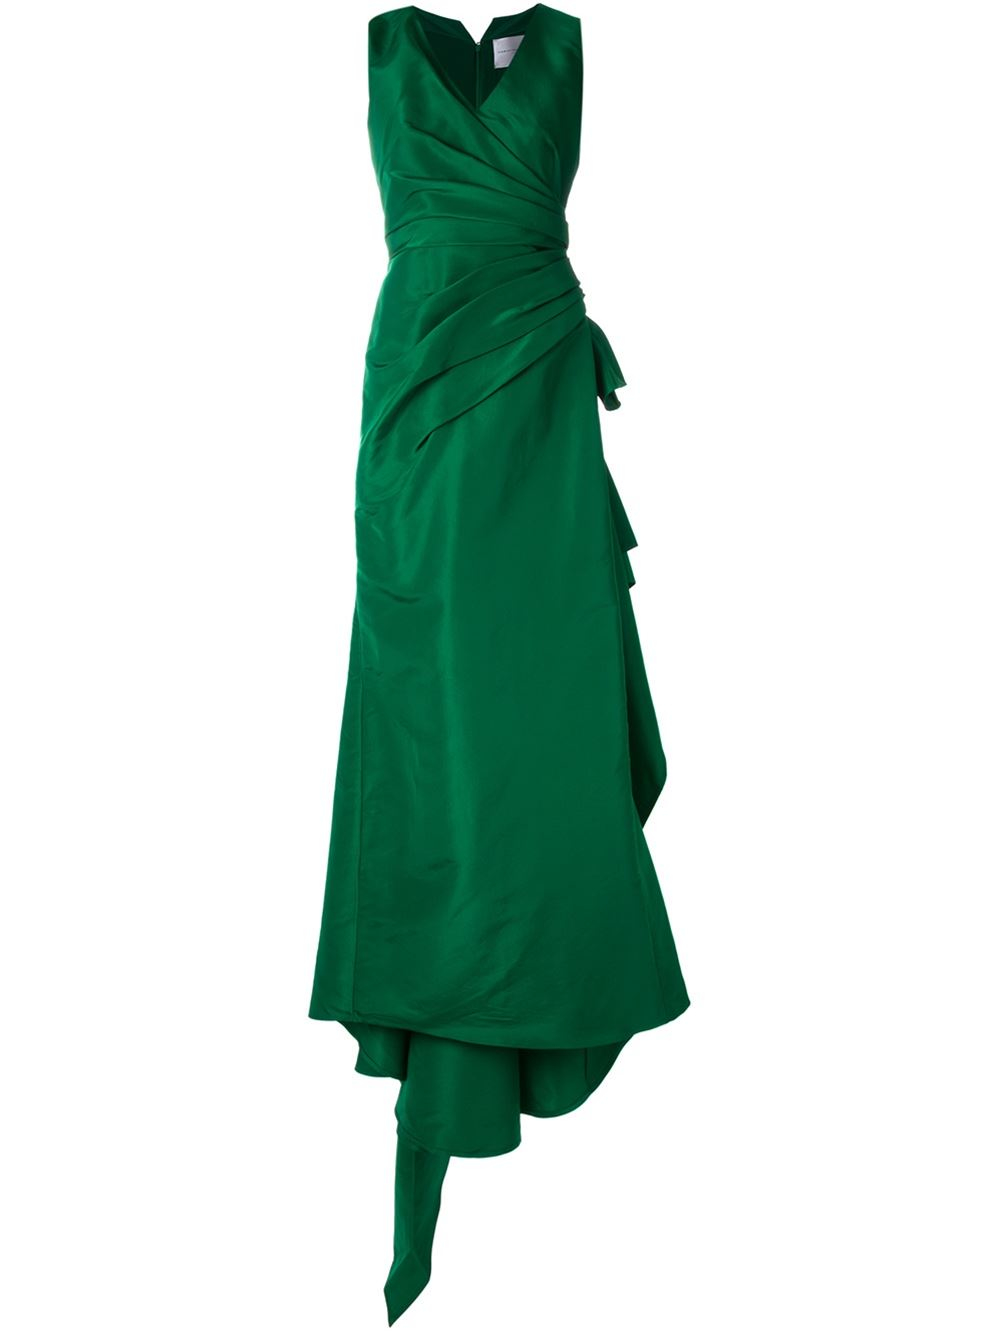 Carolina Herrera Draped Evening Dress in Green - Lyst